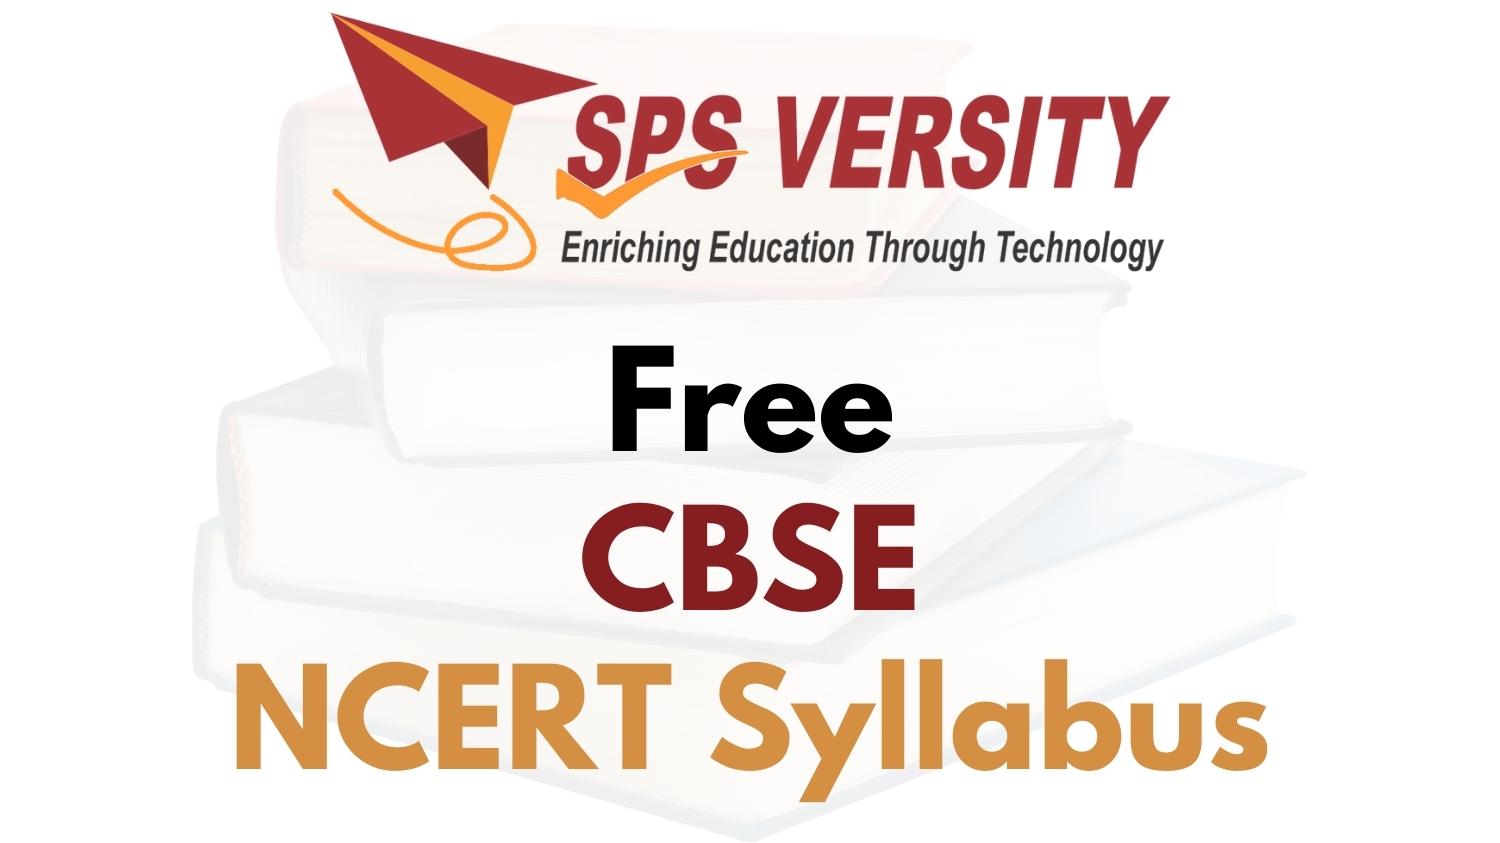 Free CBSE NCERT Syllabus